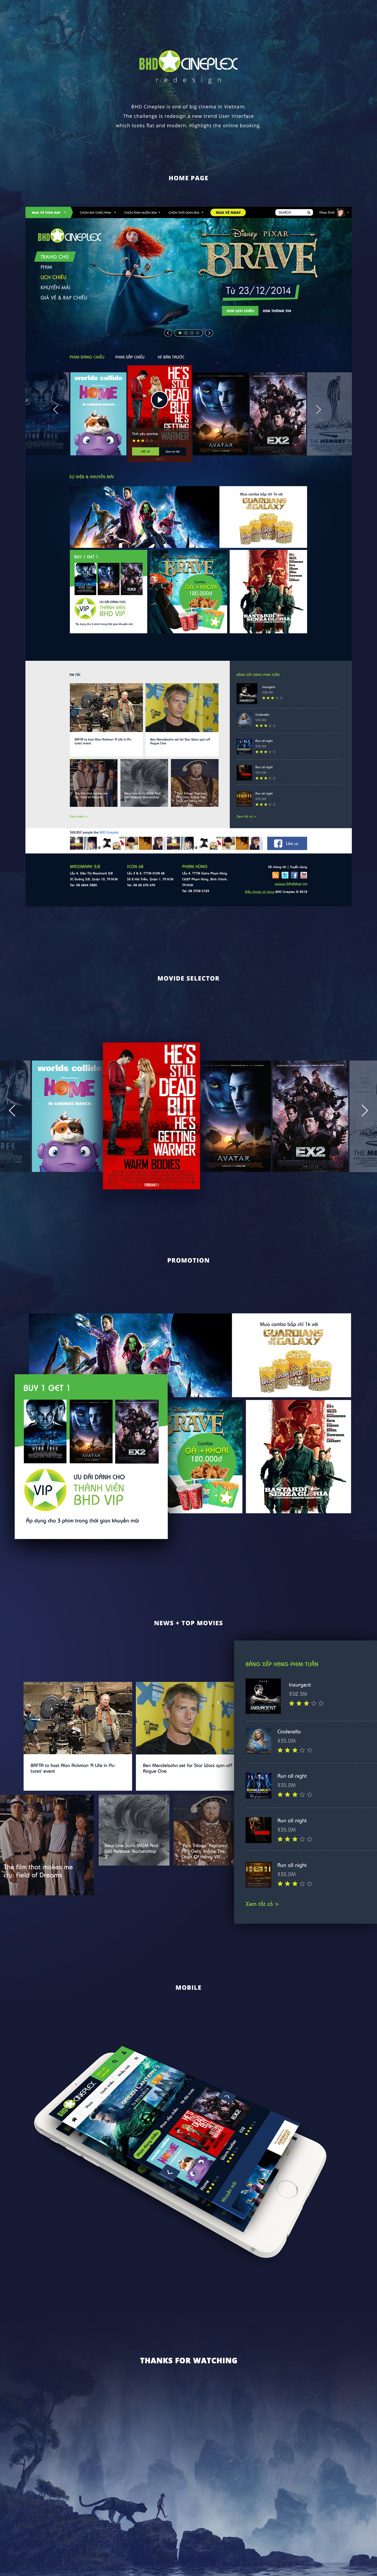 Website ux UI green Movies movie Cinema